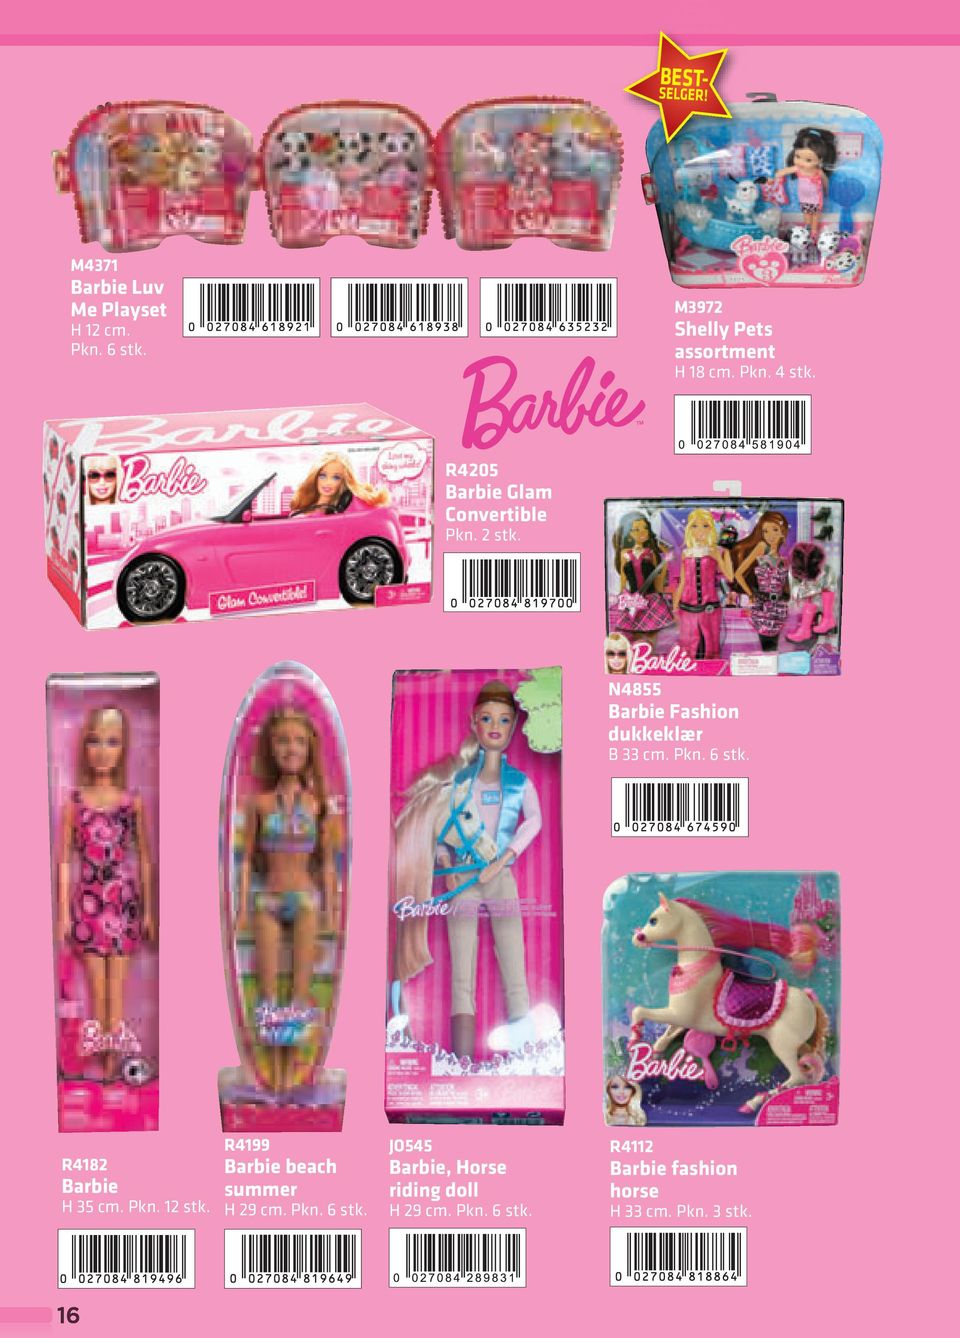 N4855 Barbie Fashion dukkeklær B 33 cm. Pkn. 6 stk. R4182 Barbie H 35 cm.